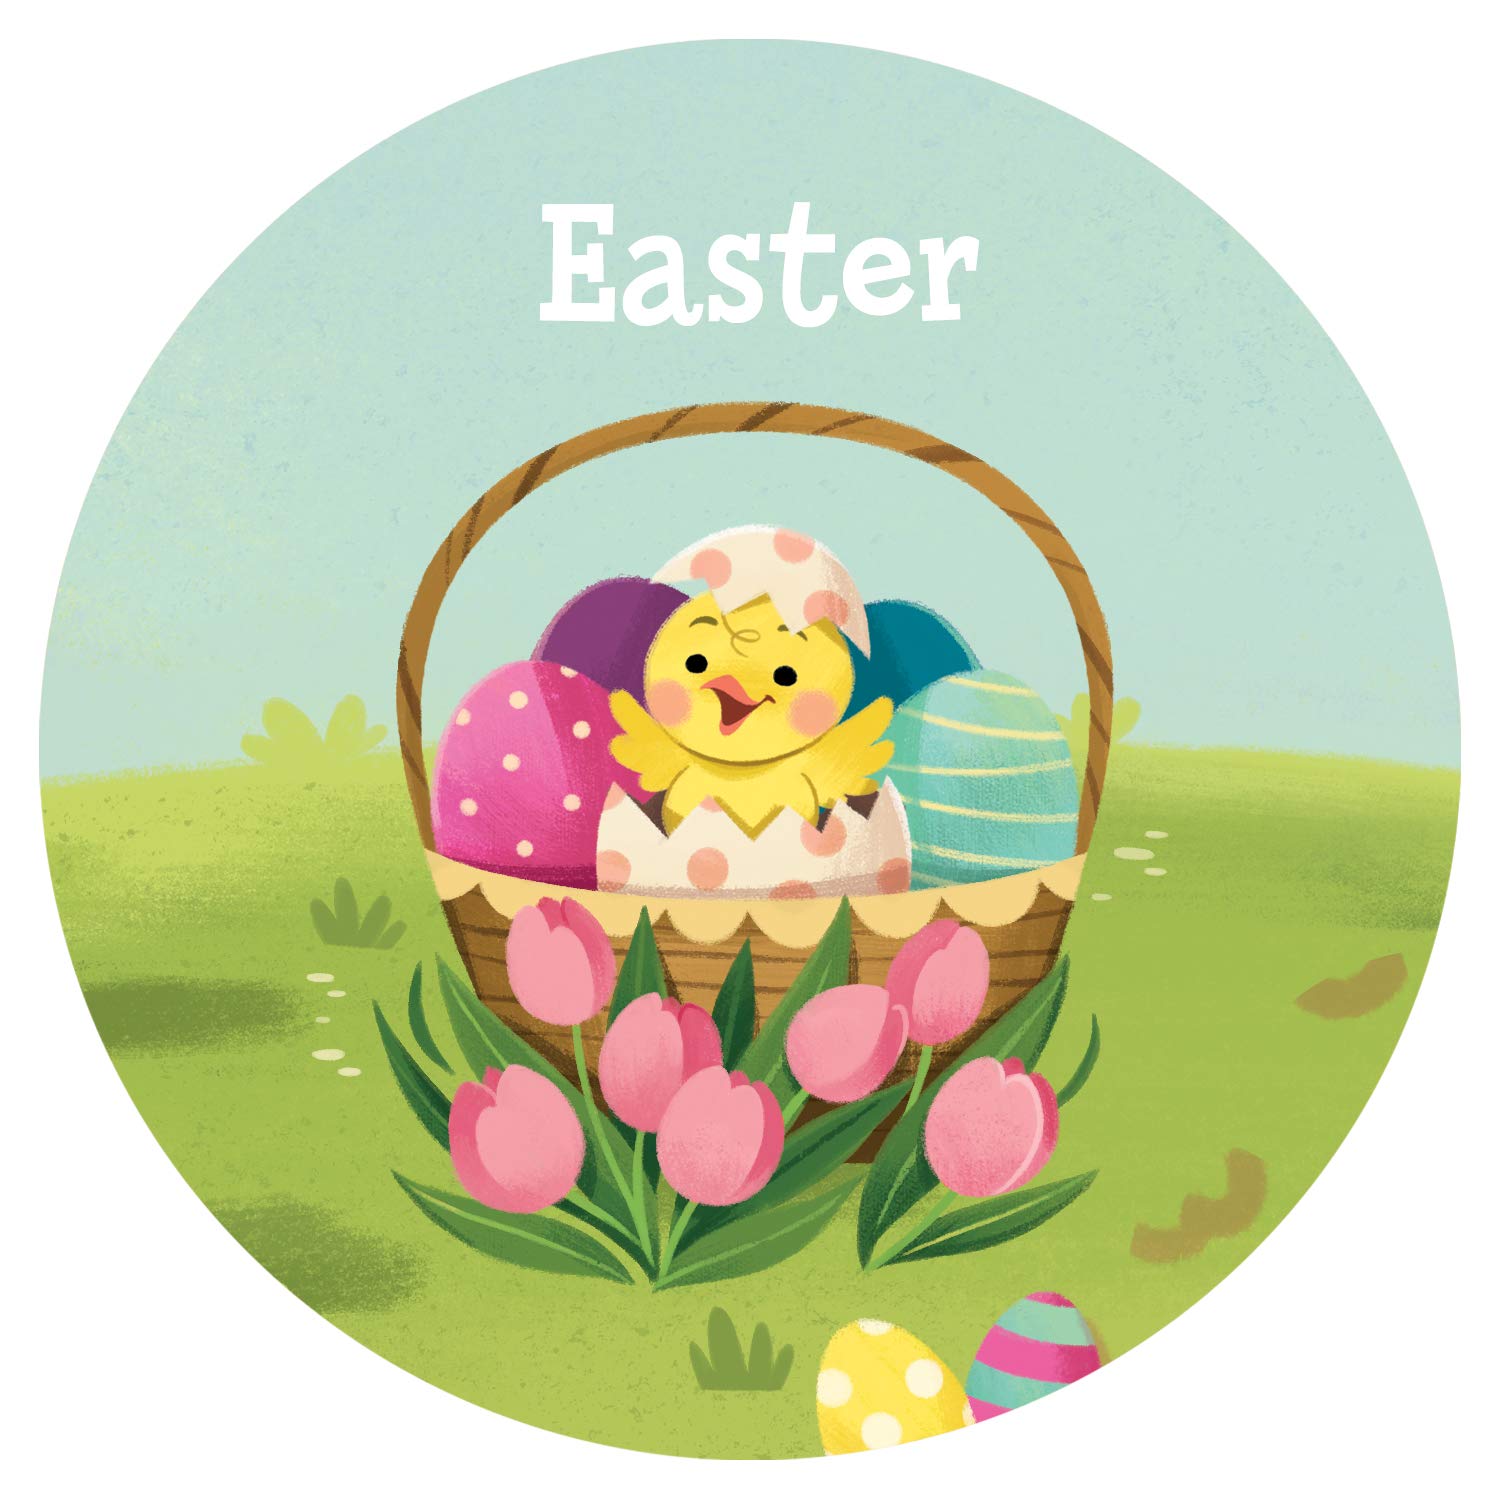 Peek-a-Flap Hop - Children's Lift-a-Flap Board Book Gift for Easter Basket Stuffers, Ages 2-5